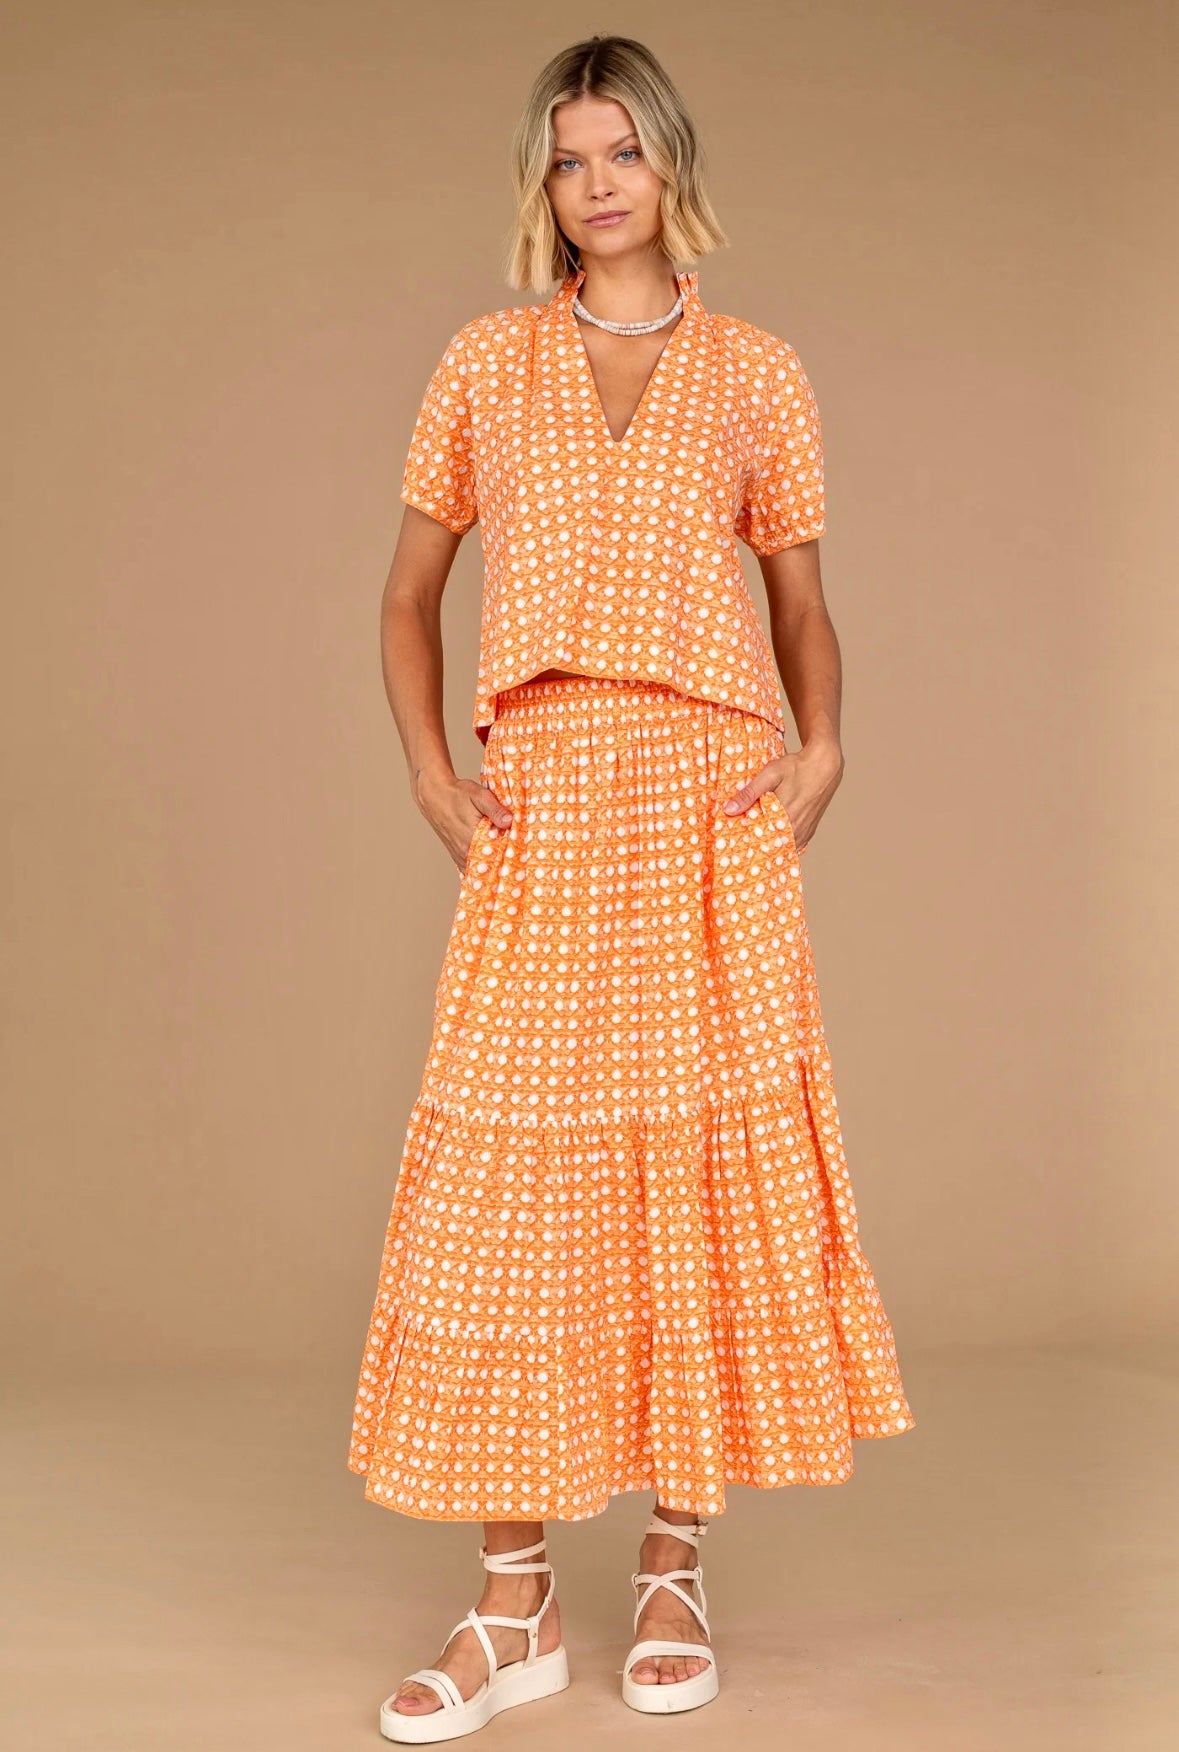 Surrey Skirt in orange wicker by Olivia James